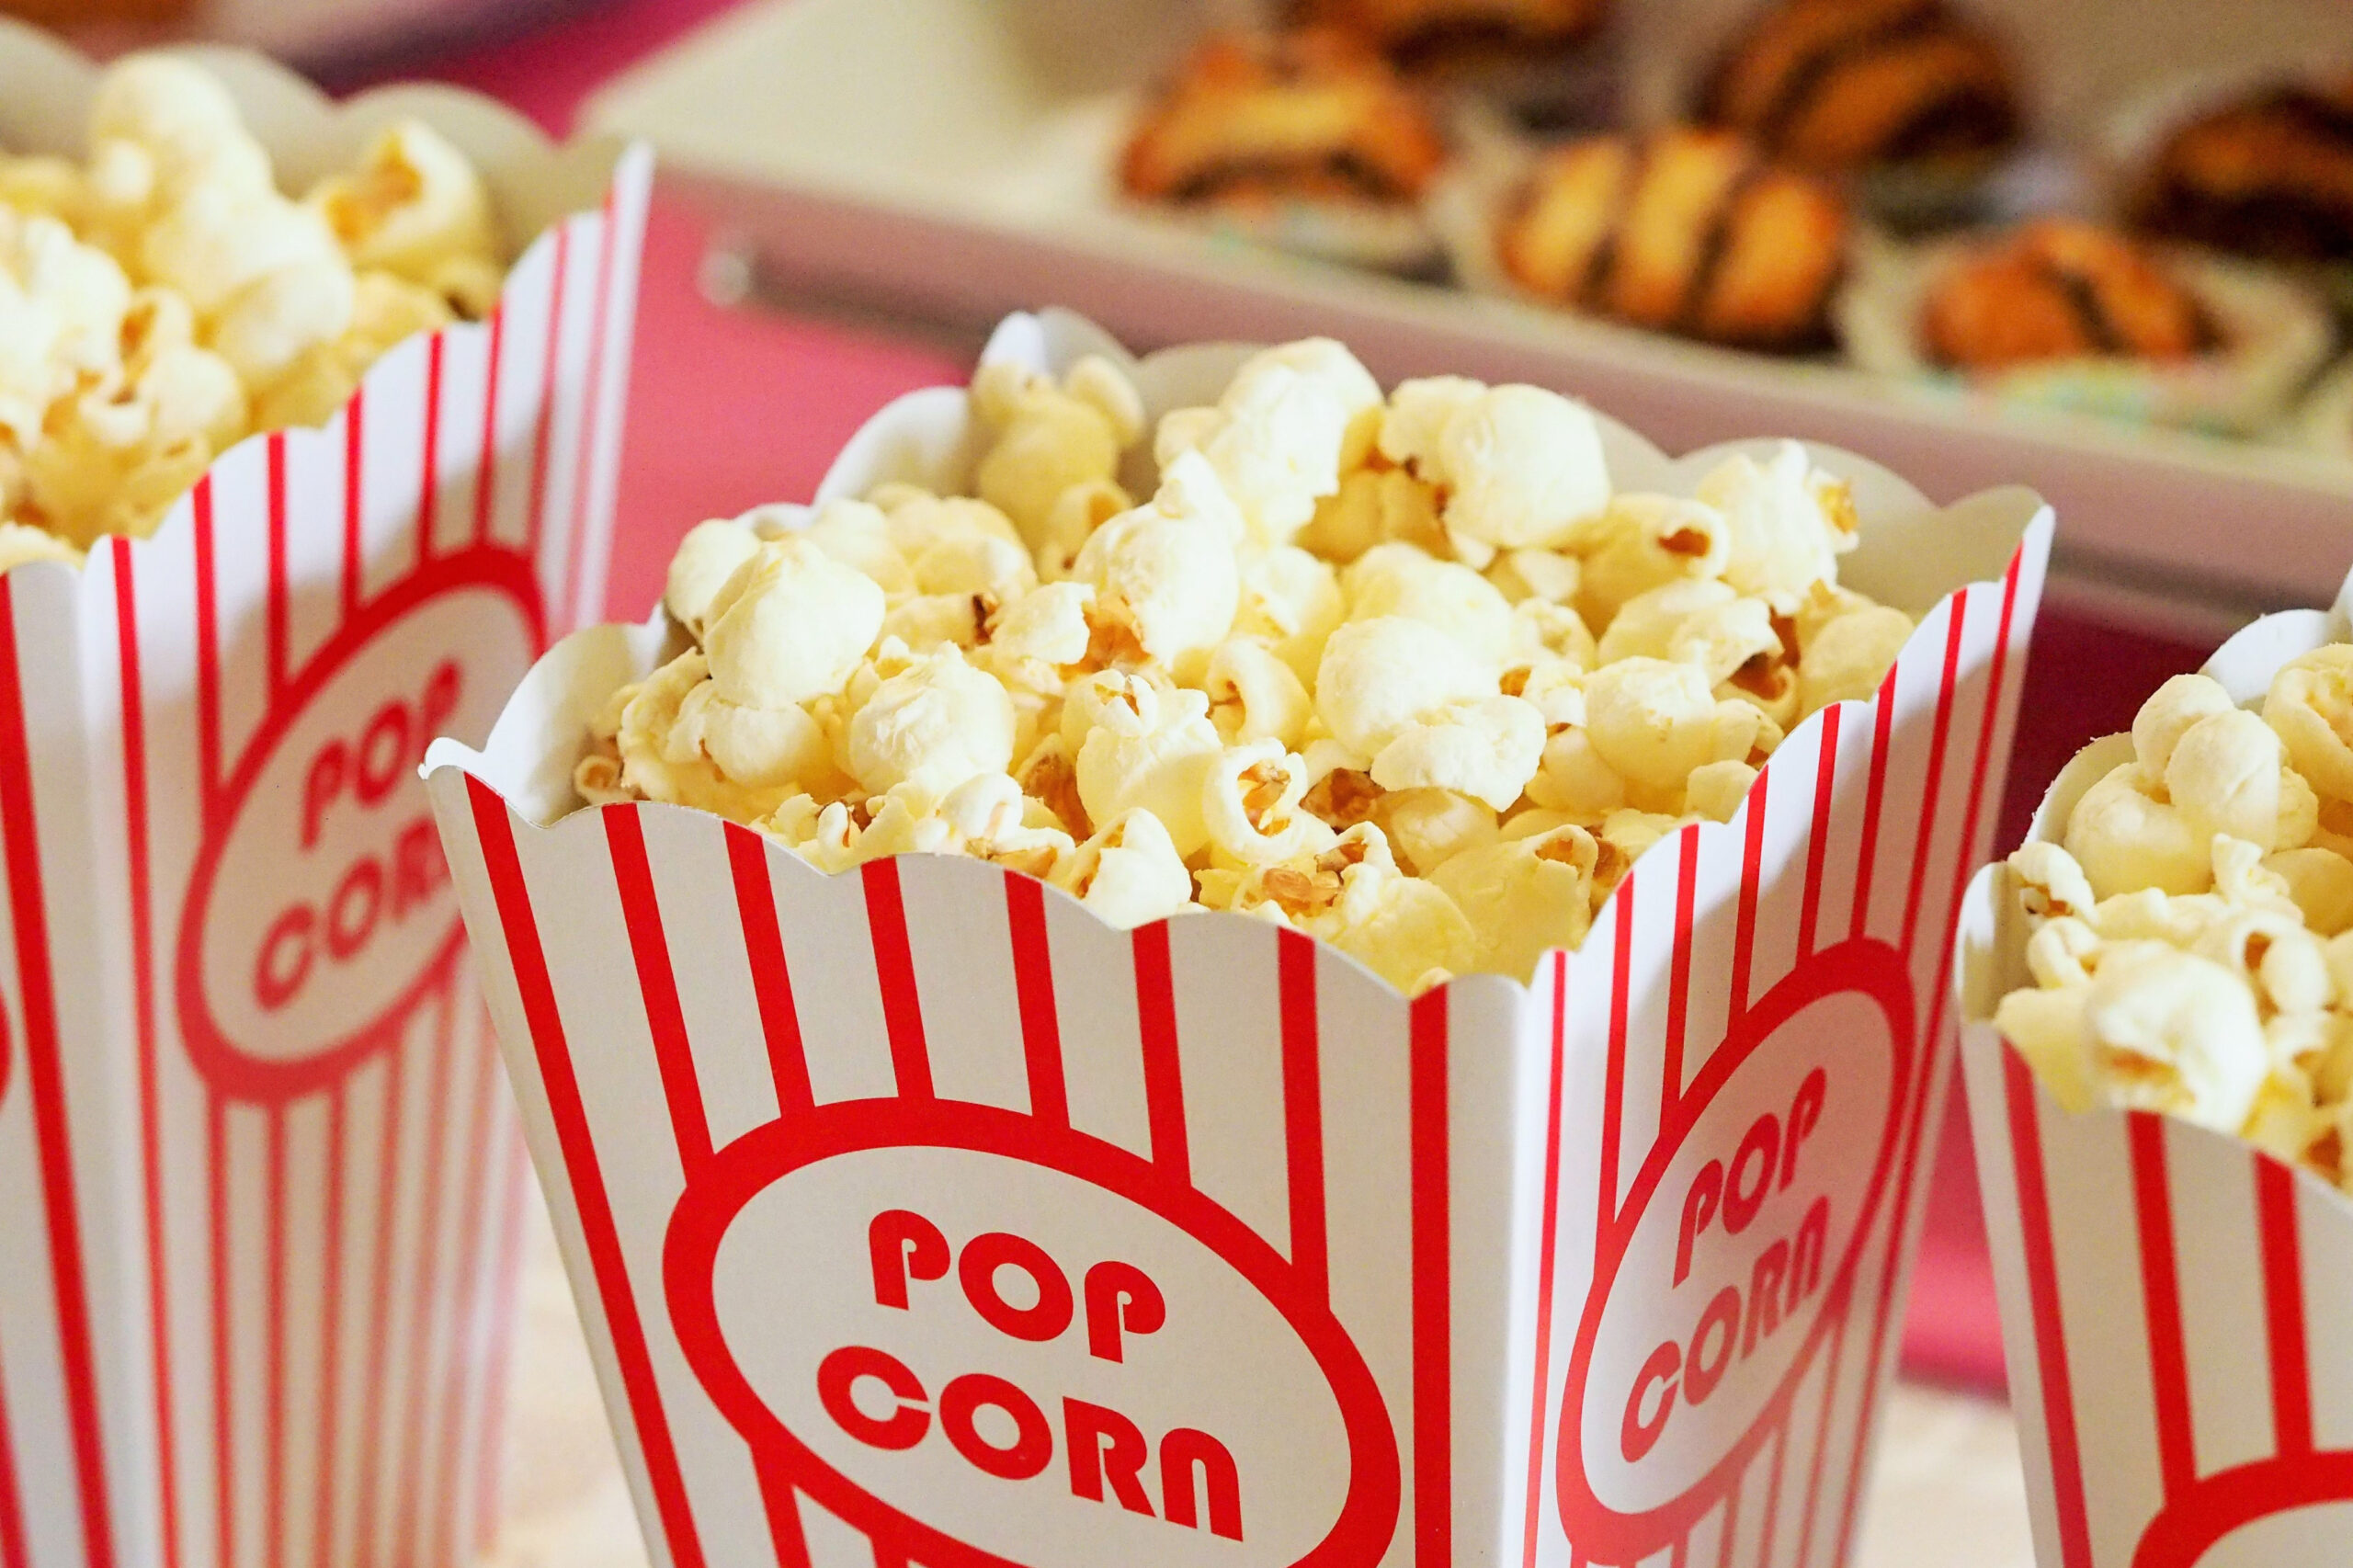 https://www.pexels.com/photo/food-snack-popcorn-movie-theater-33129/